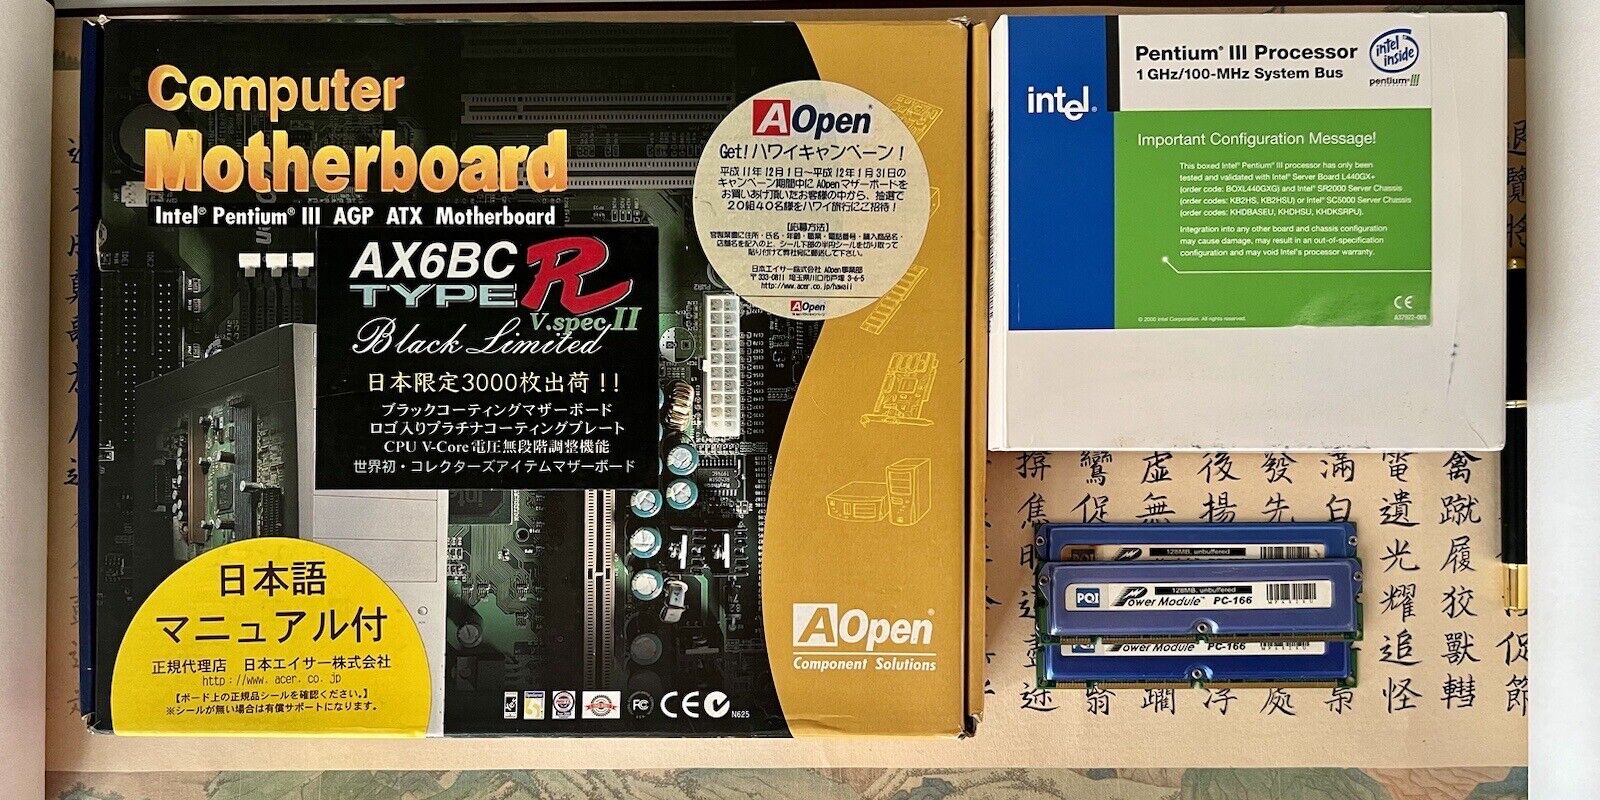 Aopen AX6BC PRO II（Type.R）“Black Limited”Slot1 &Pentium3 1G/100FSB（BOX）*No Rams*